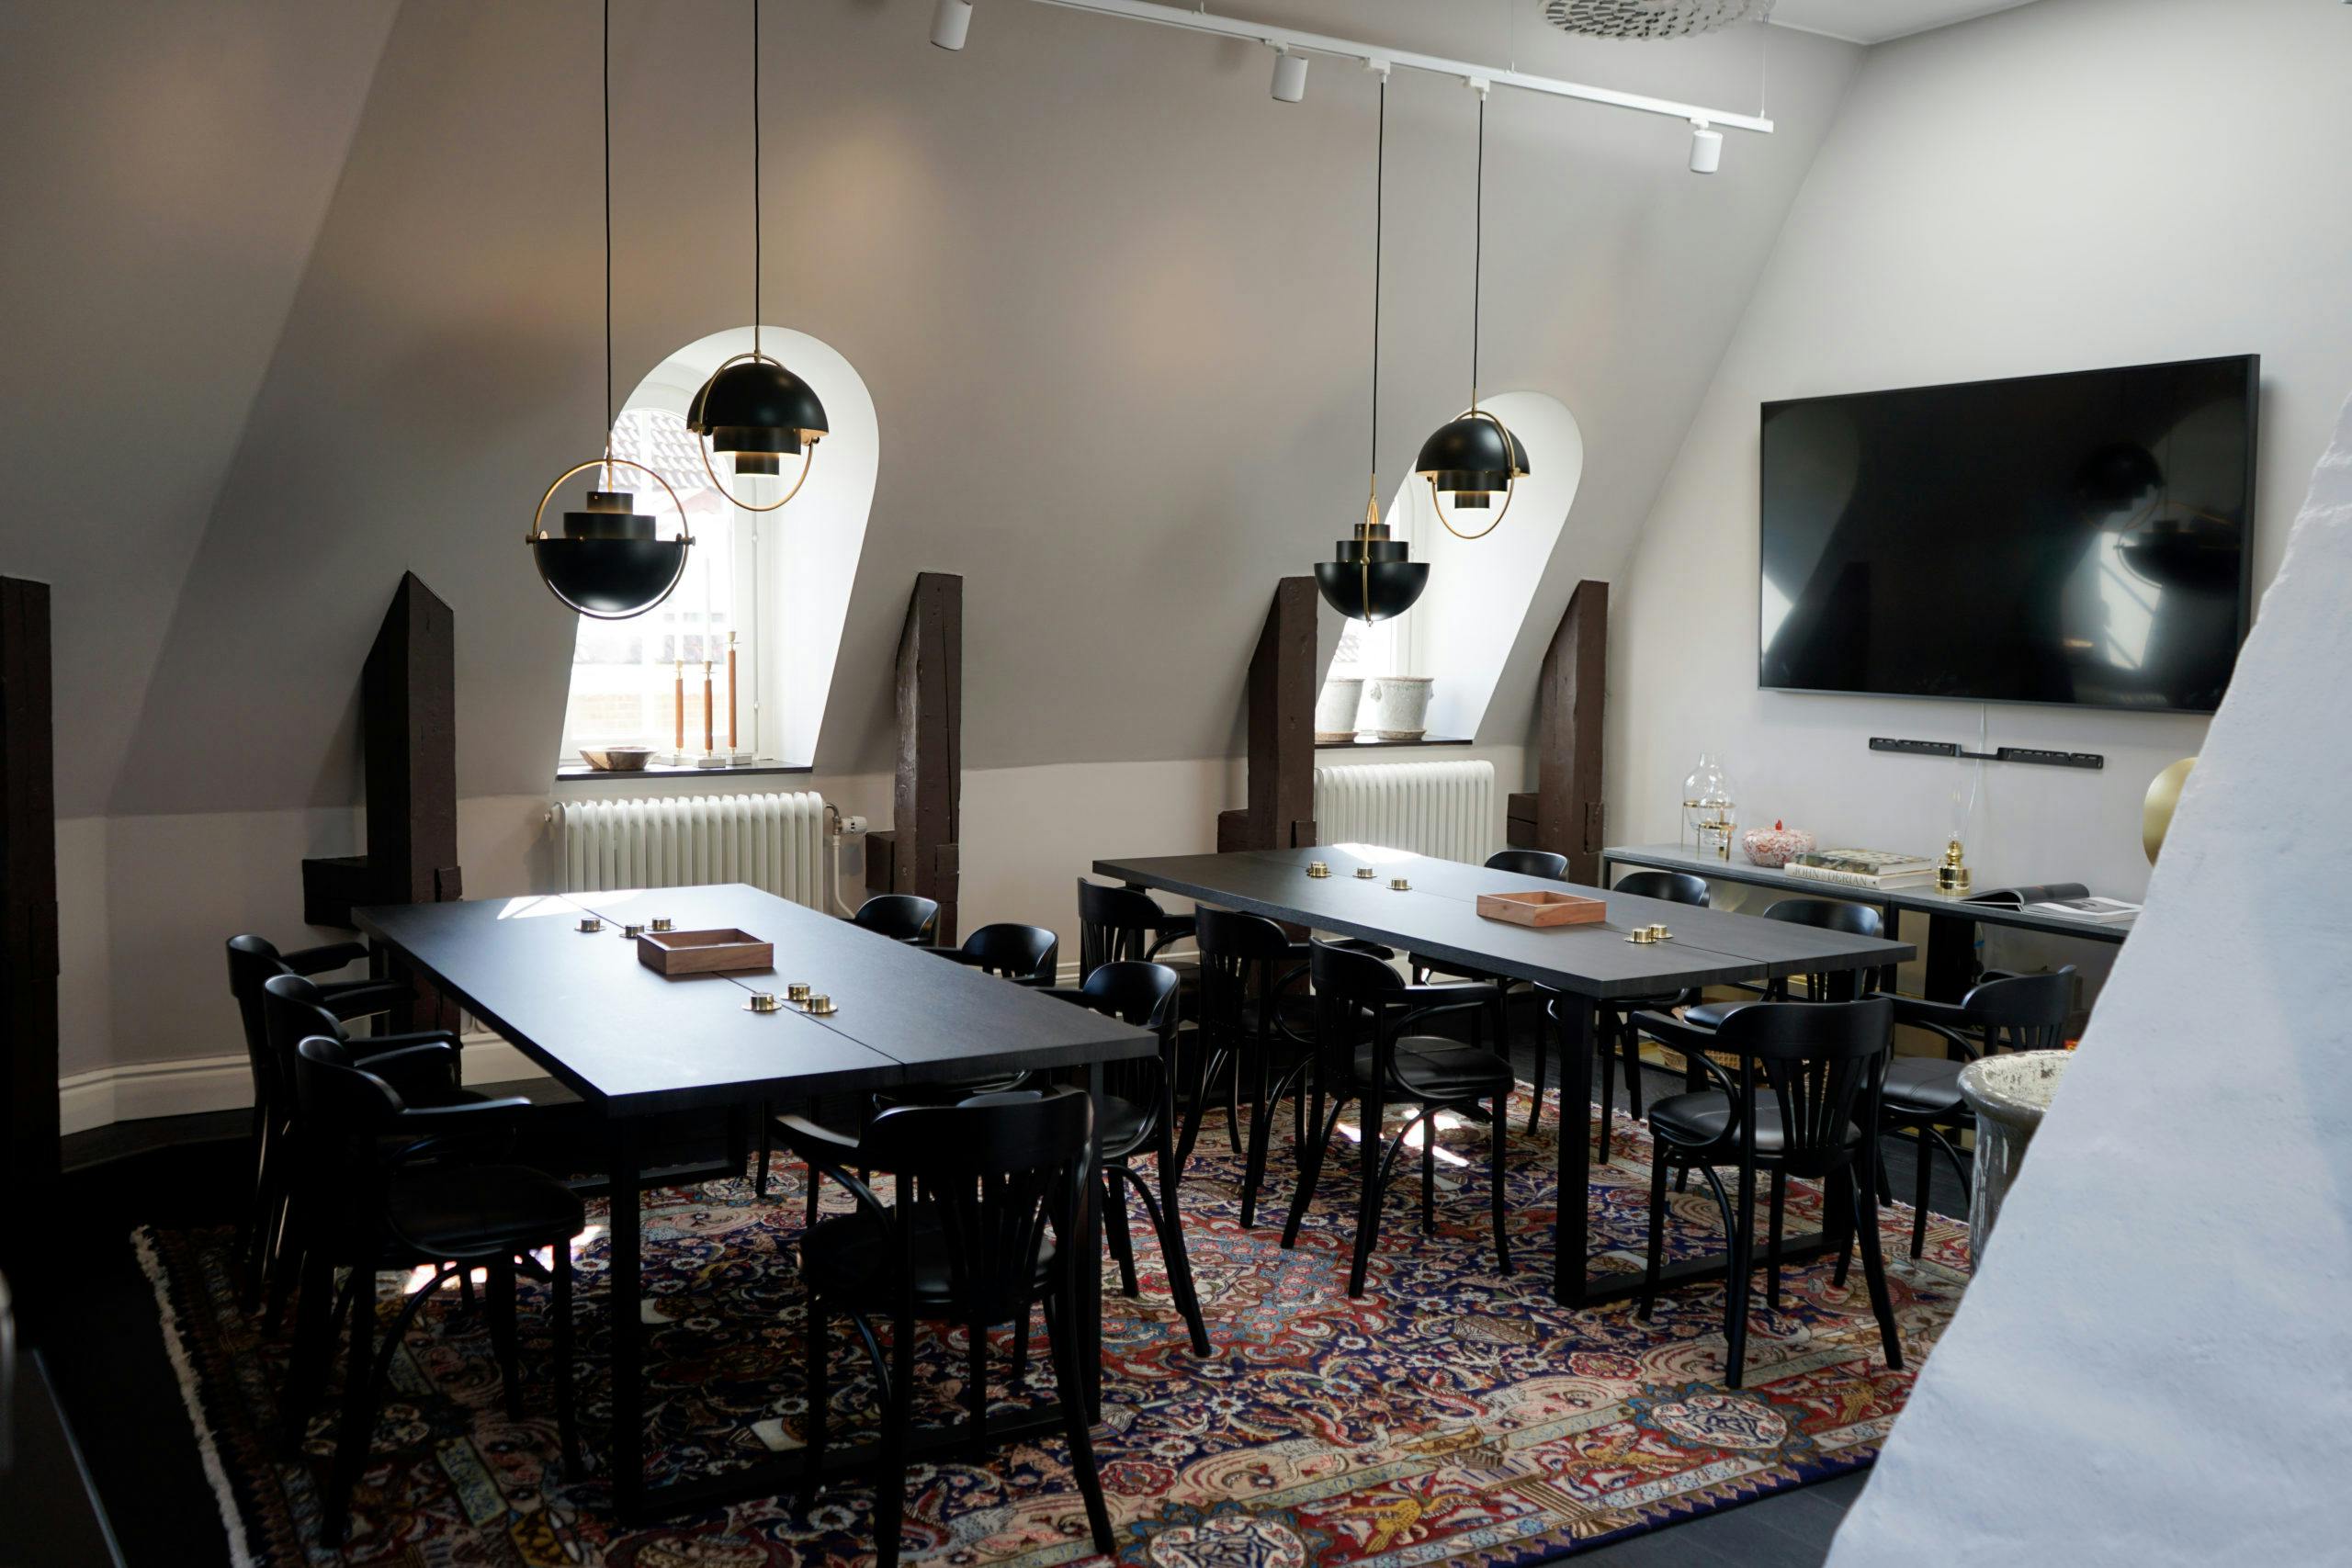 Dining tables at Consid´s office in Nyköping